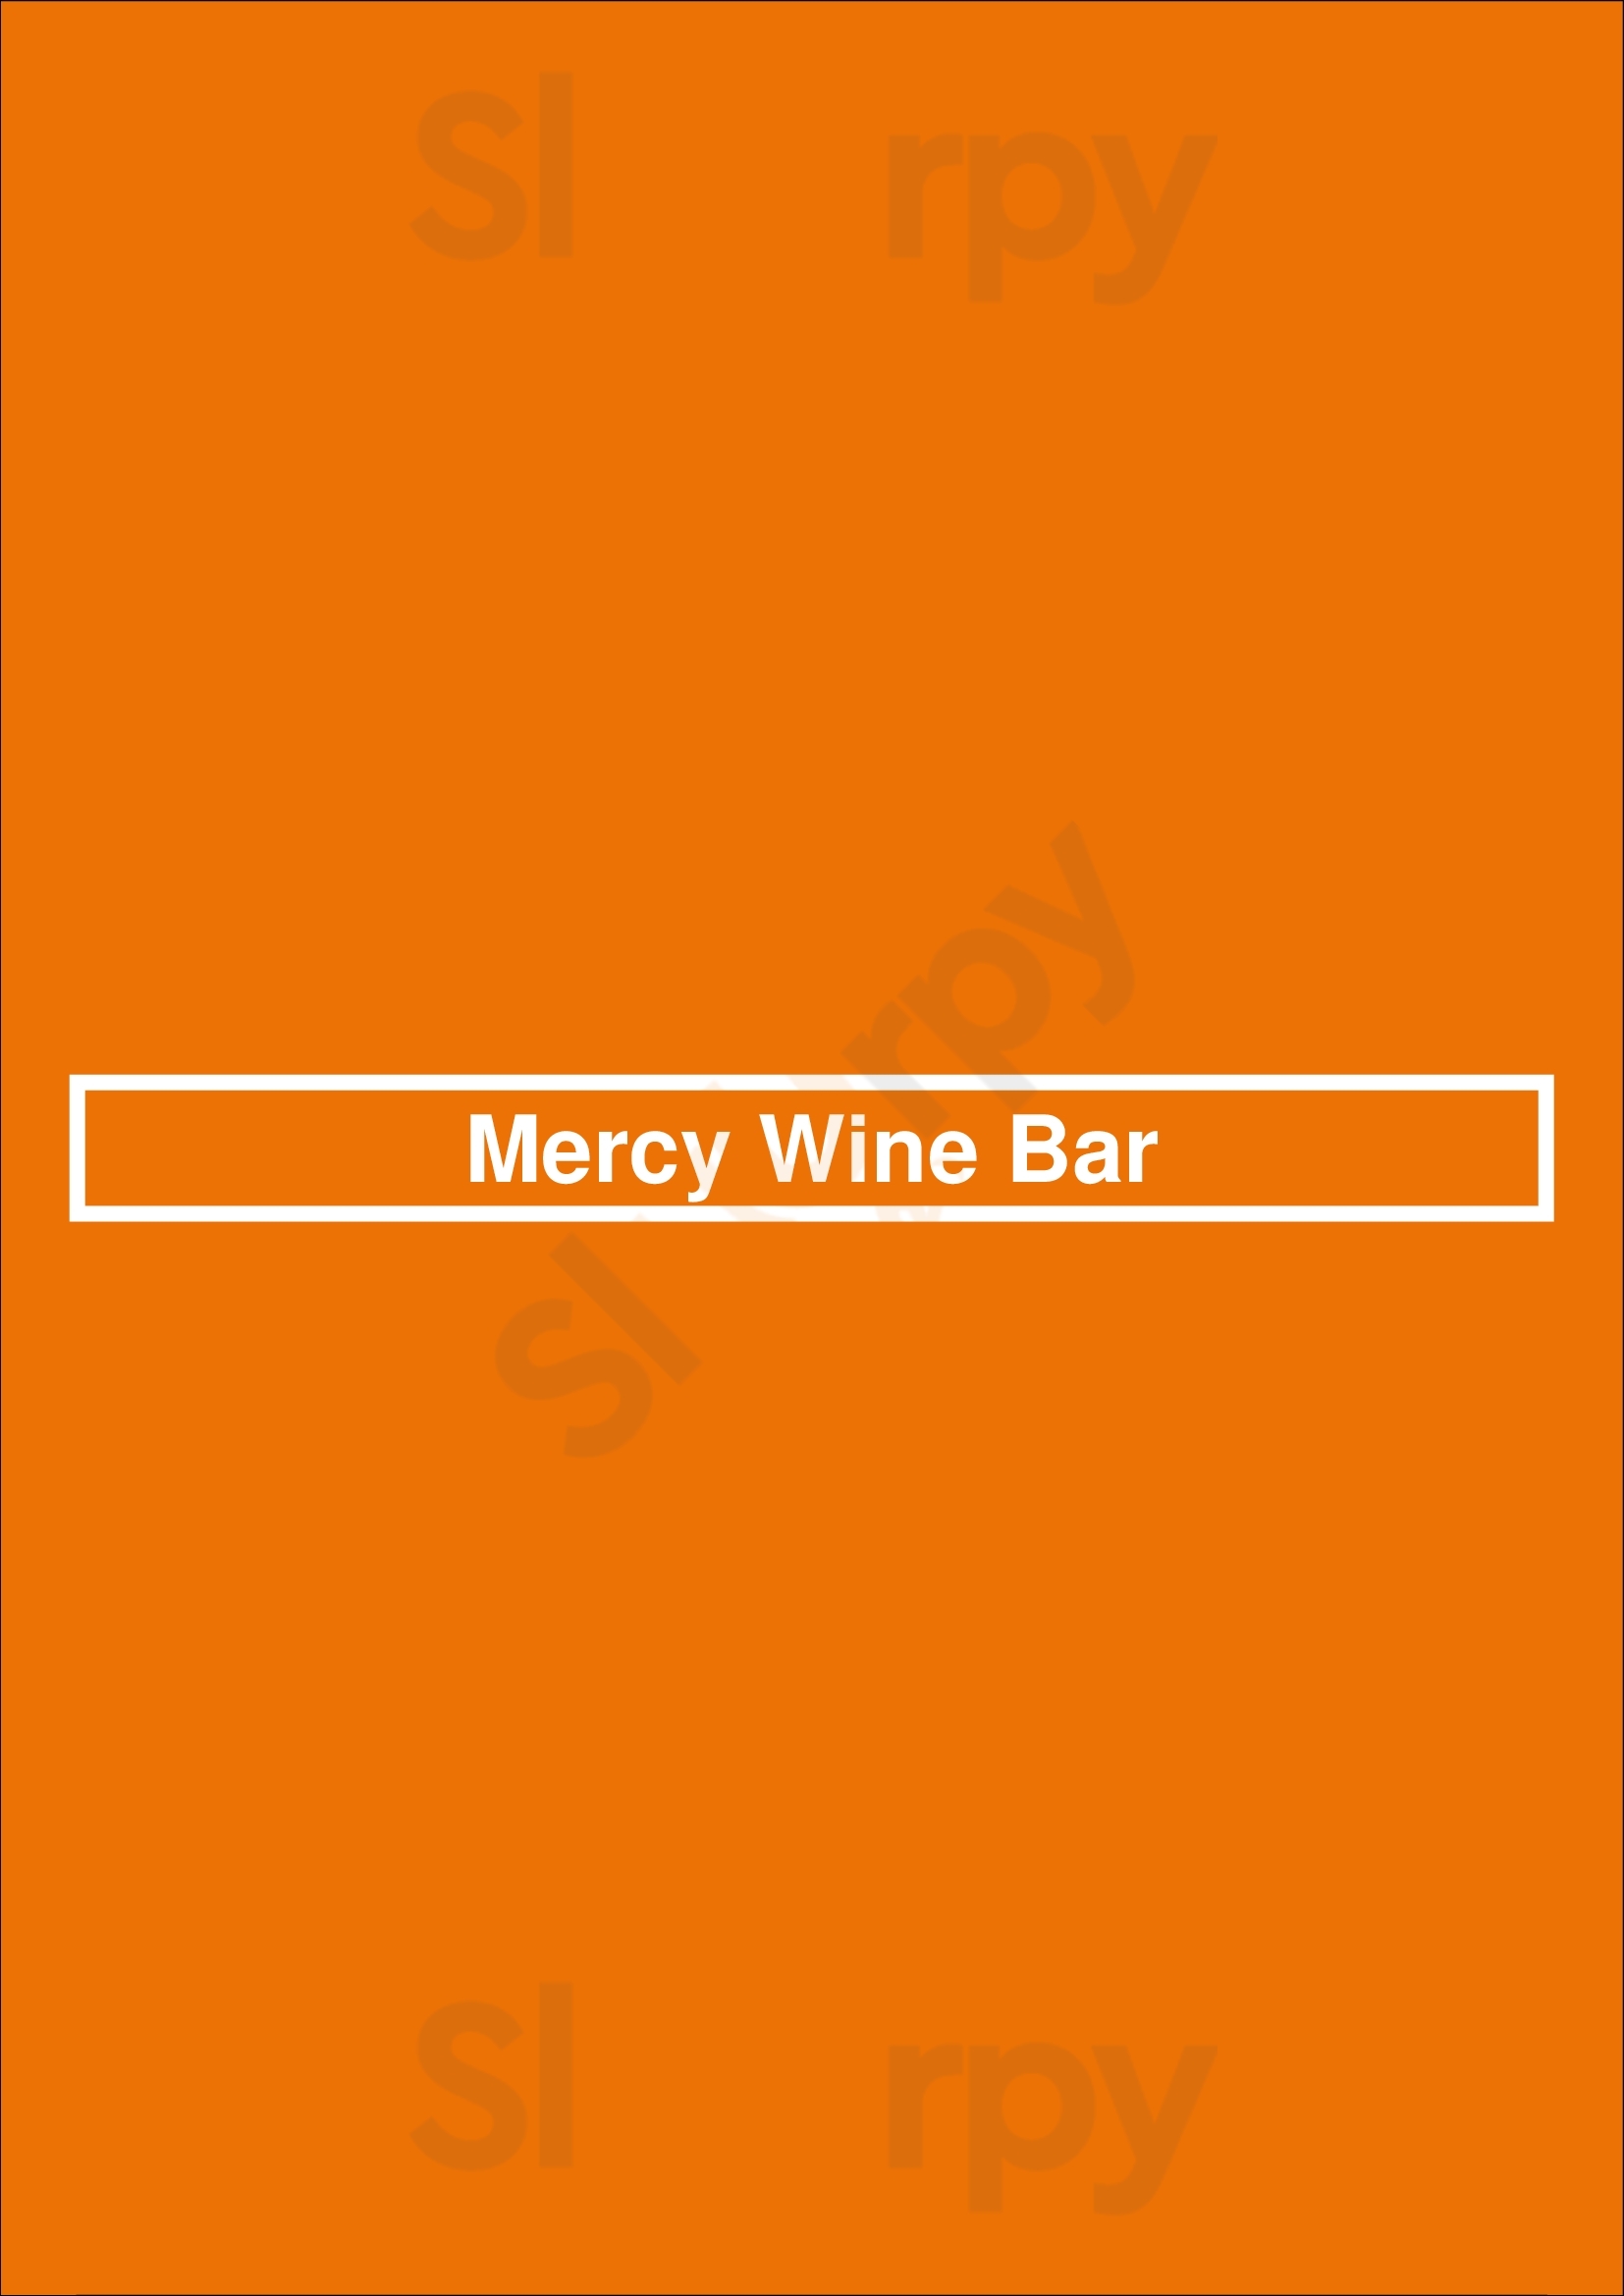 Mercy Wine Bar Addison Menu - 1